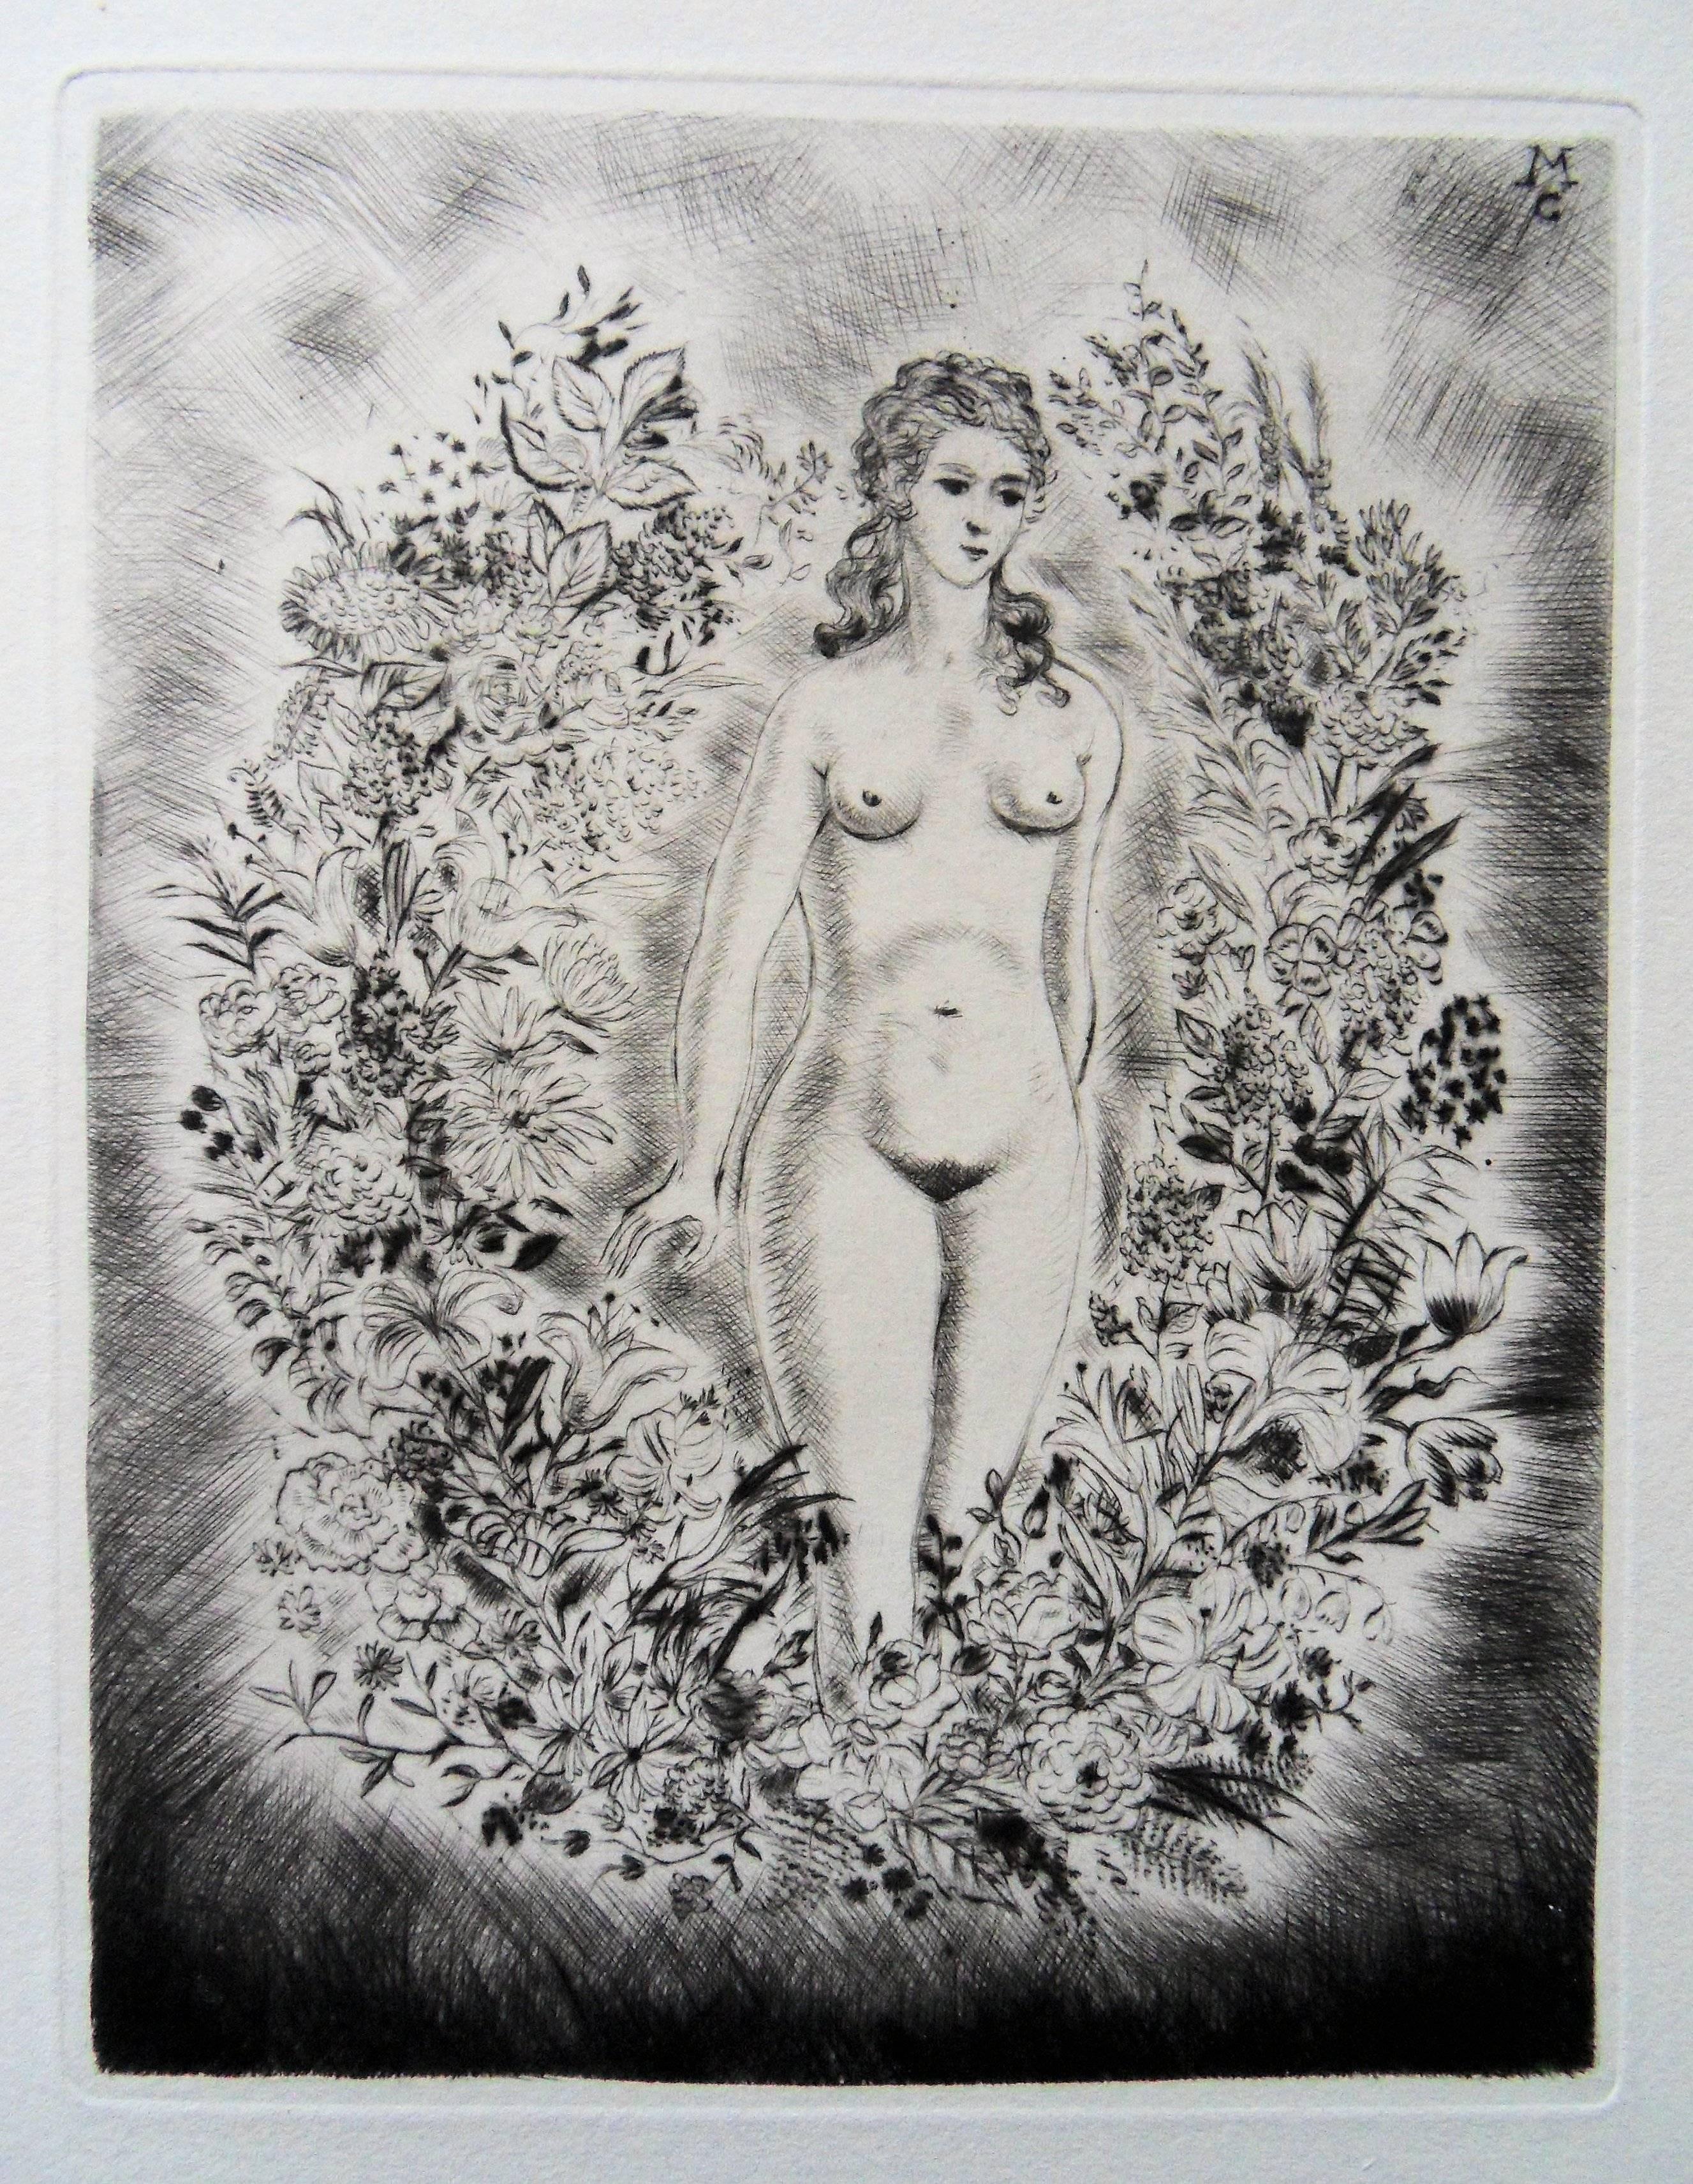 Woman in my Dreams - Original etching, 1943